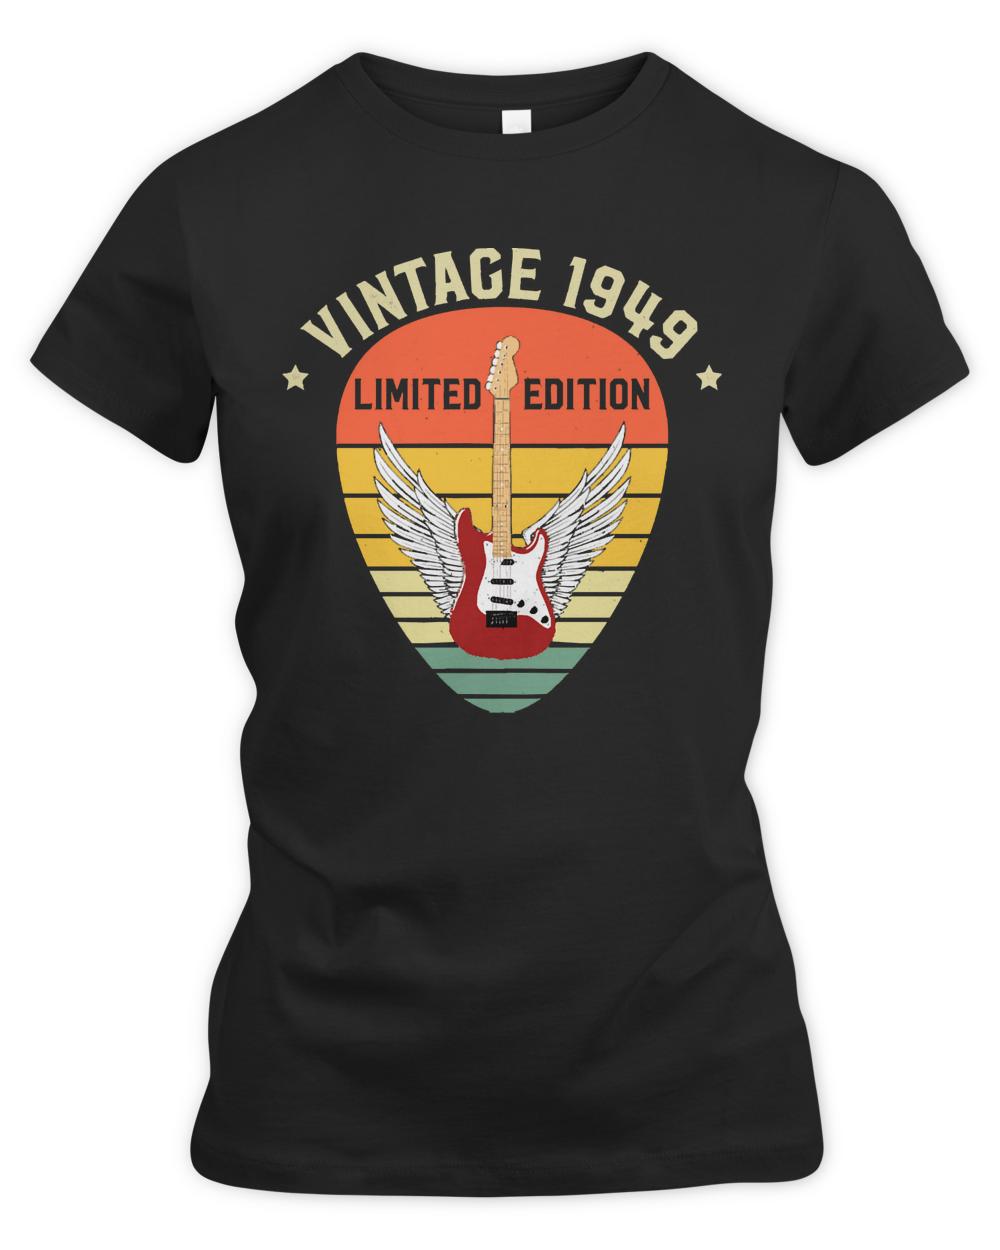 Vintage 1949 T- Shirt Vintage 1949 Limited Edition Guitar T- Shirt